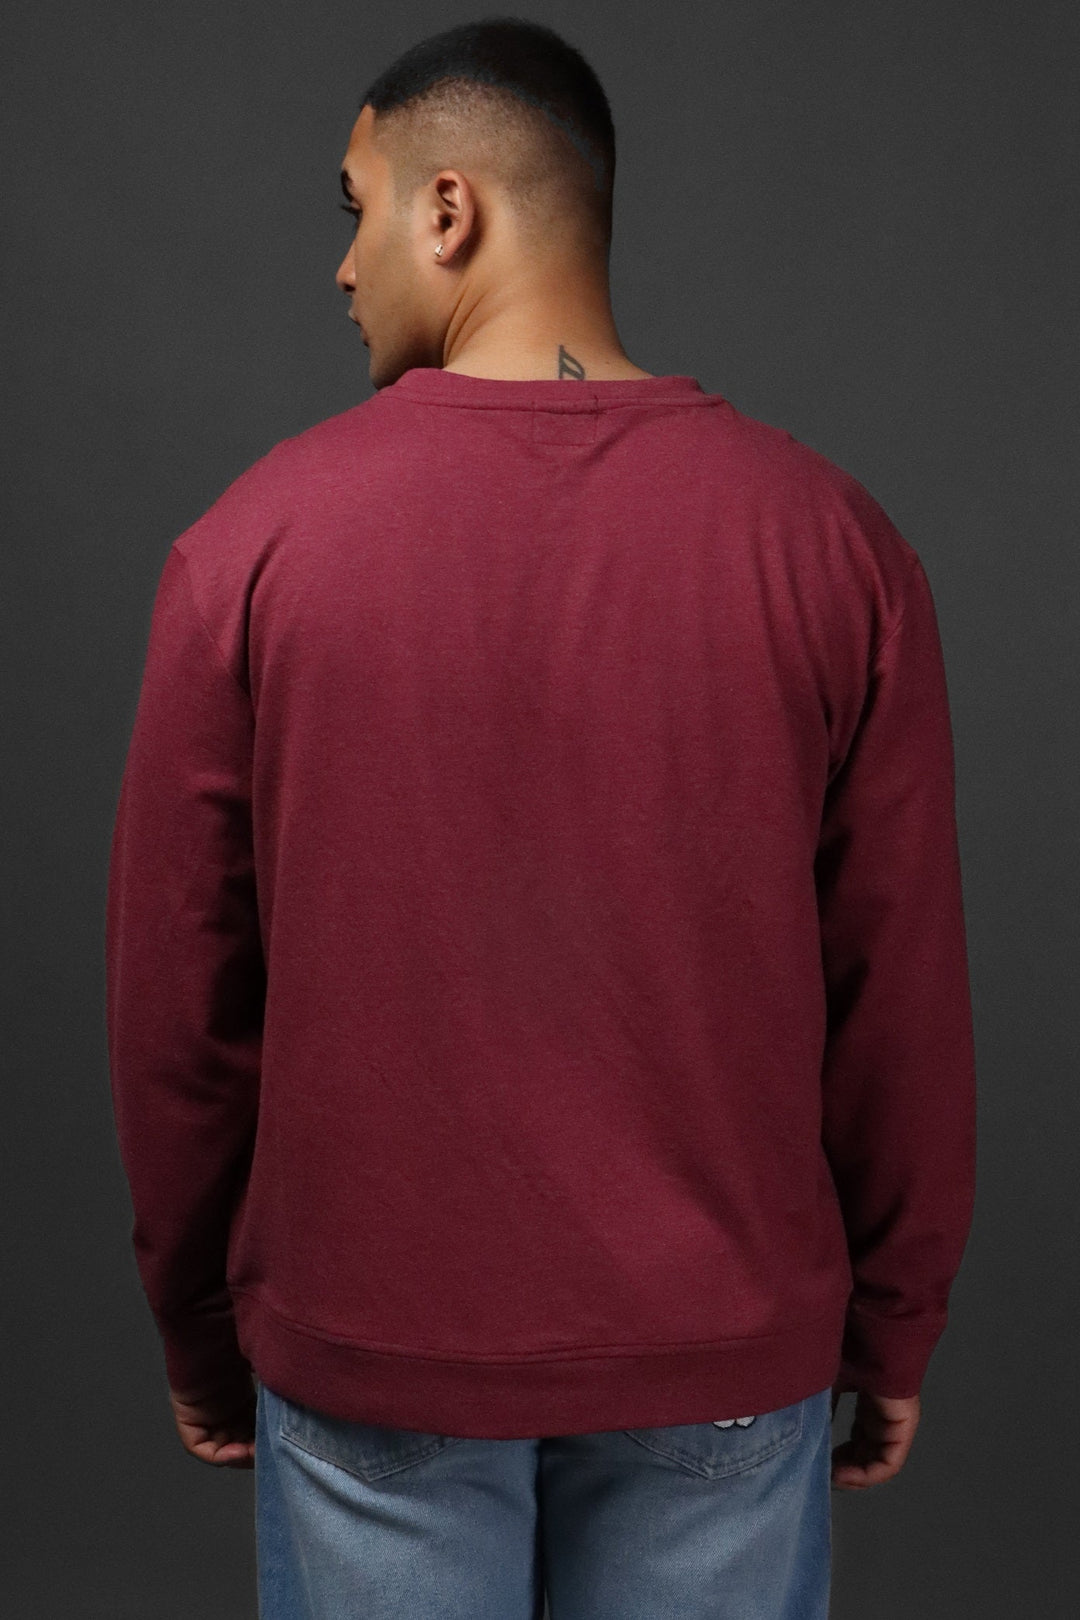 Basic Sweatshirt - Men's Basic Sweatshirt#6